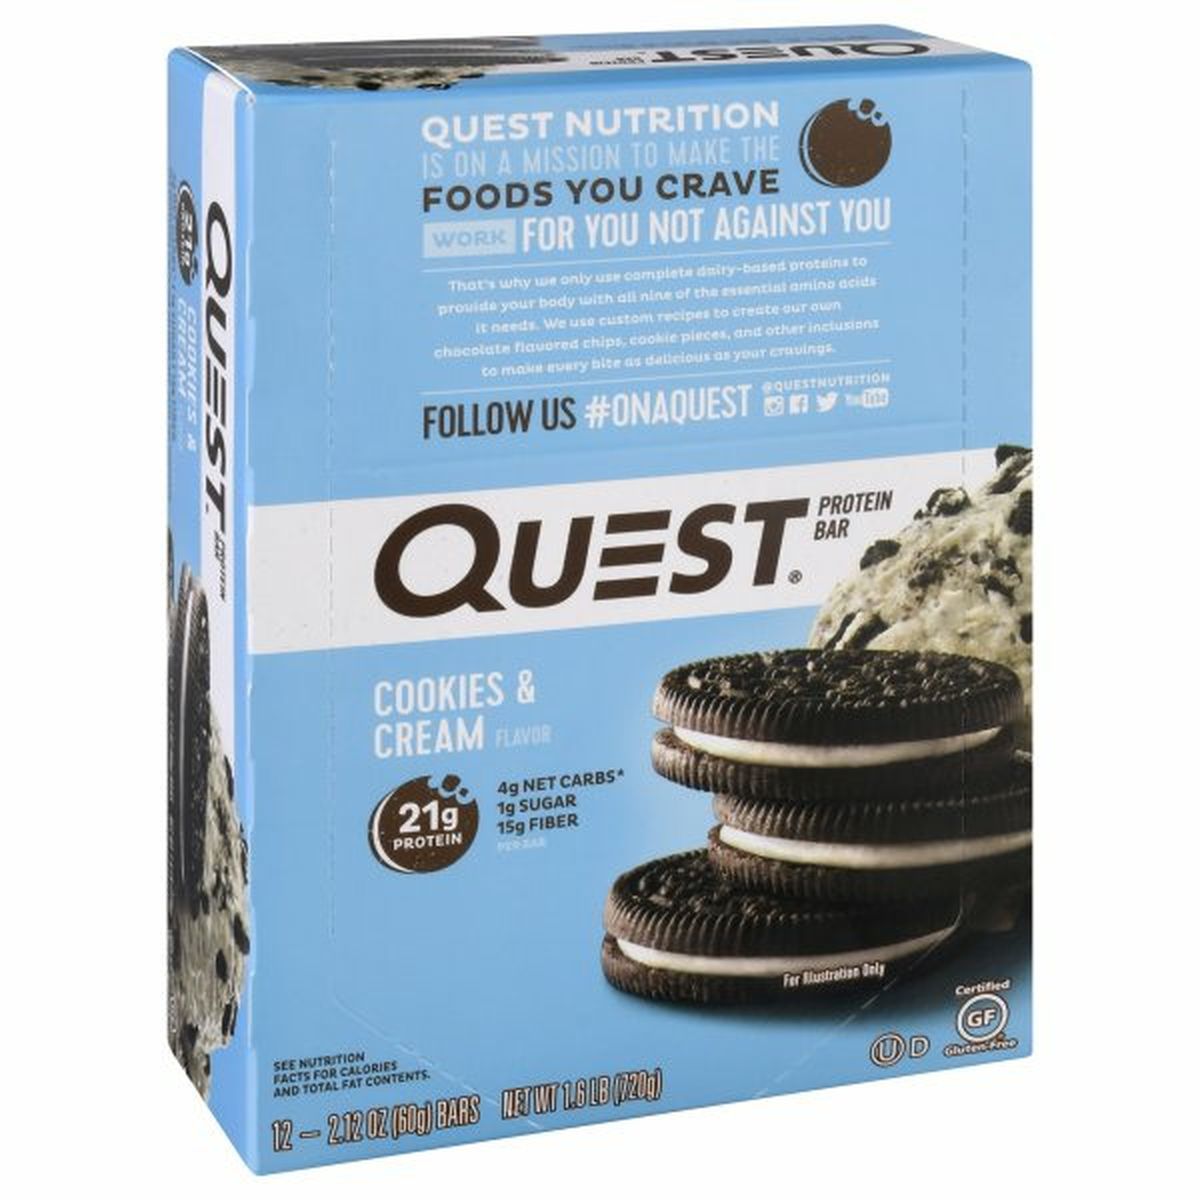 Calories in Quest Protein Bar, Cookies & Cream Flavor